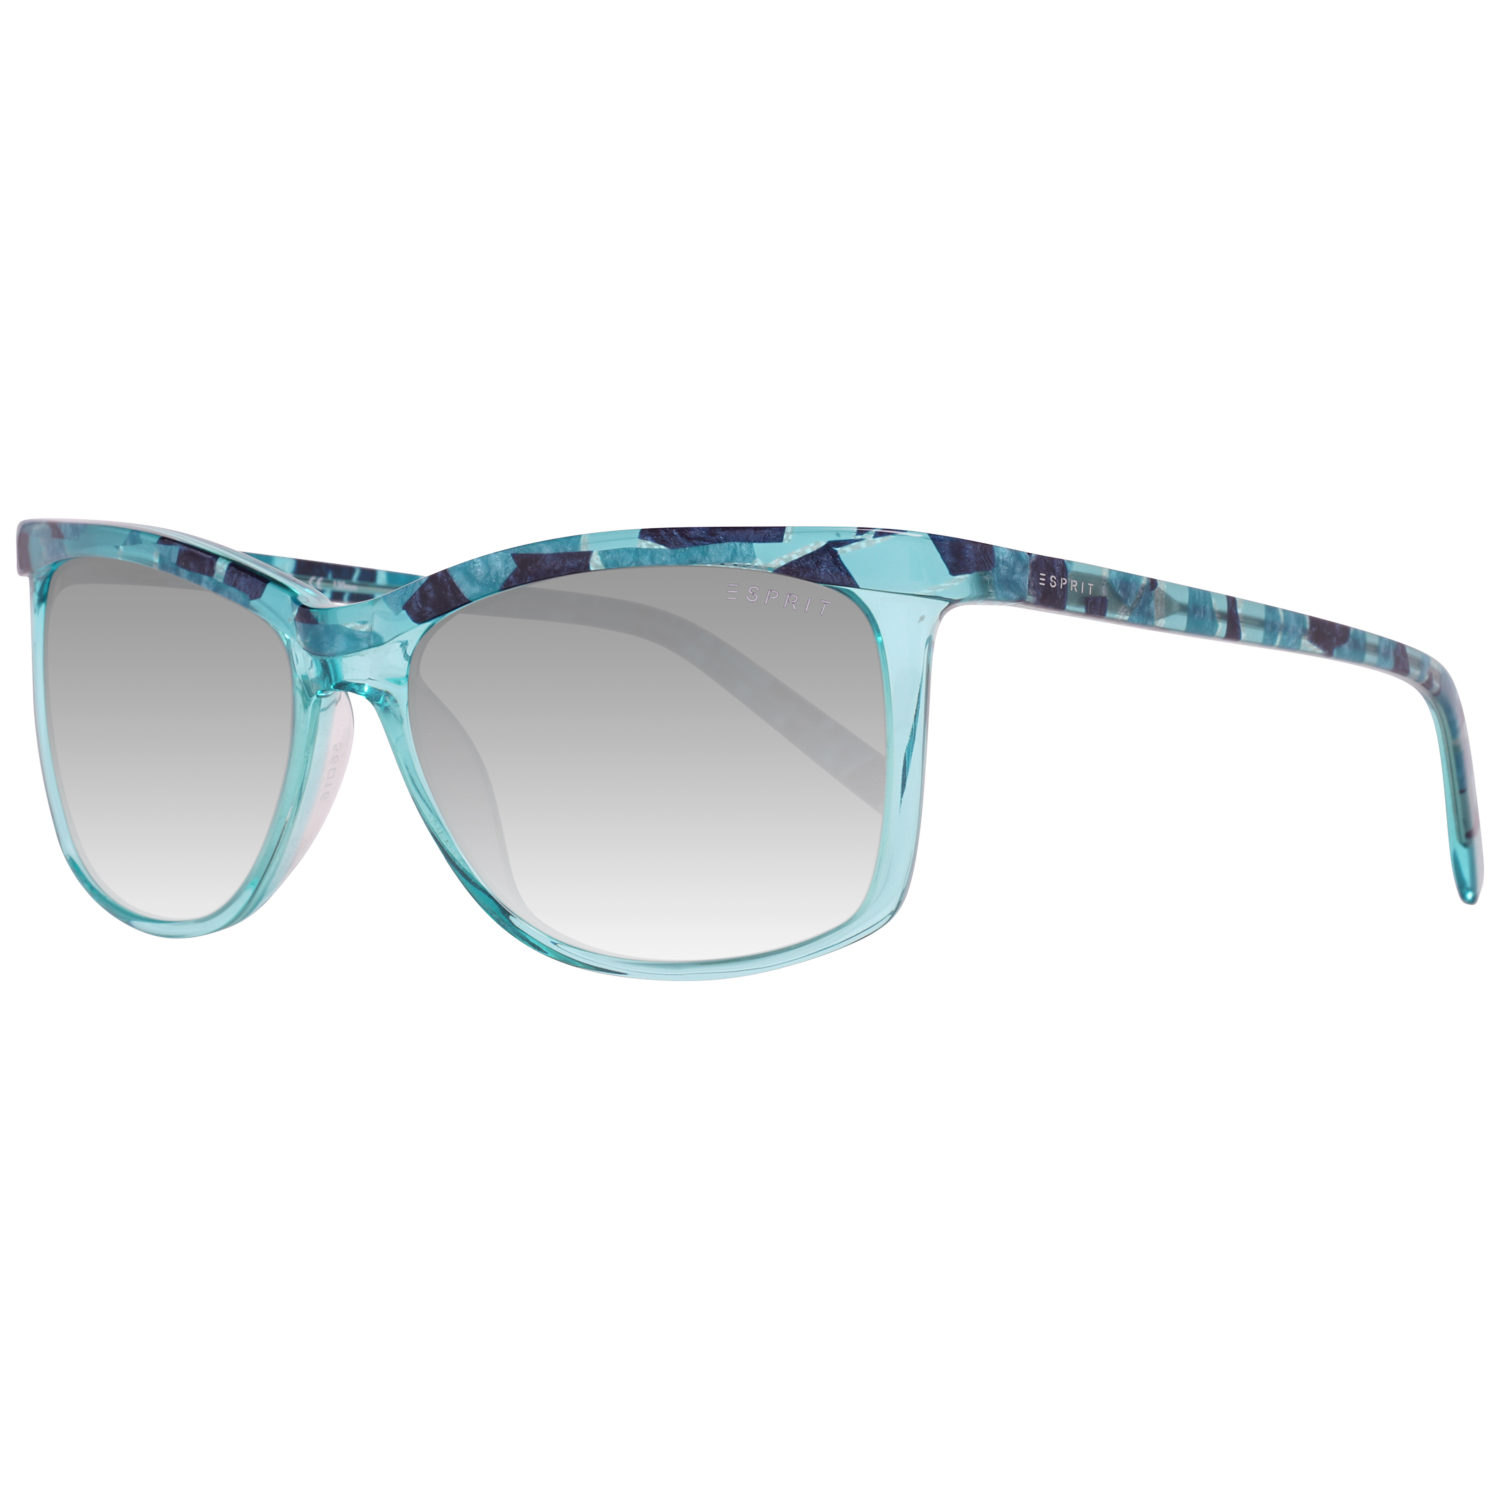 Esprit Sunglasses ET17861 563 56 Blue